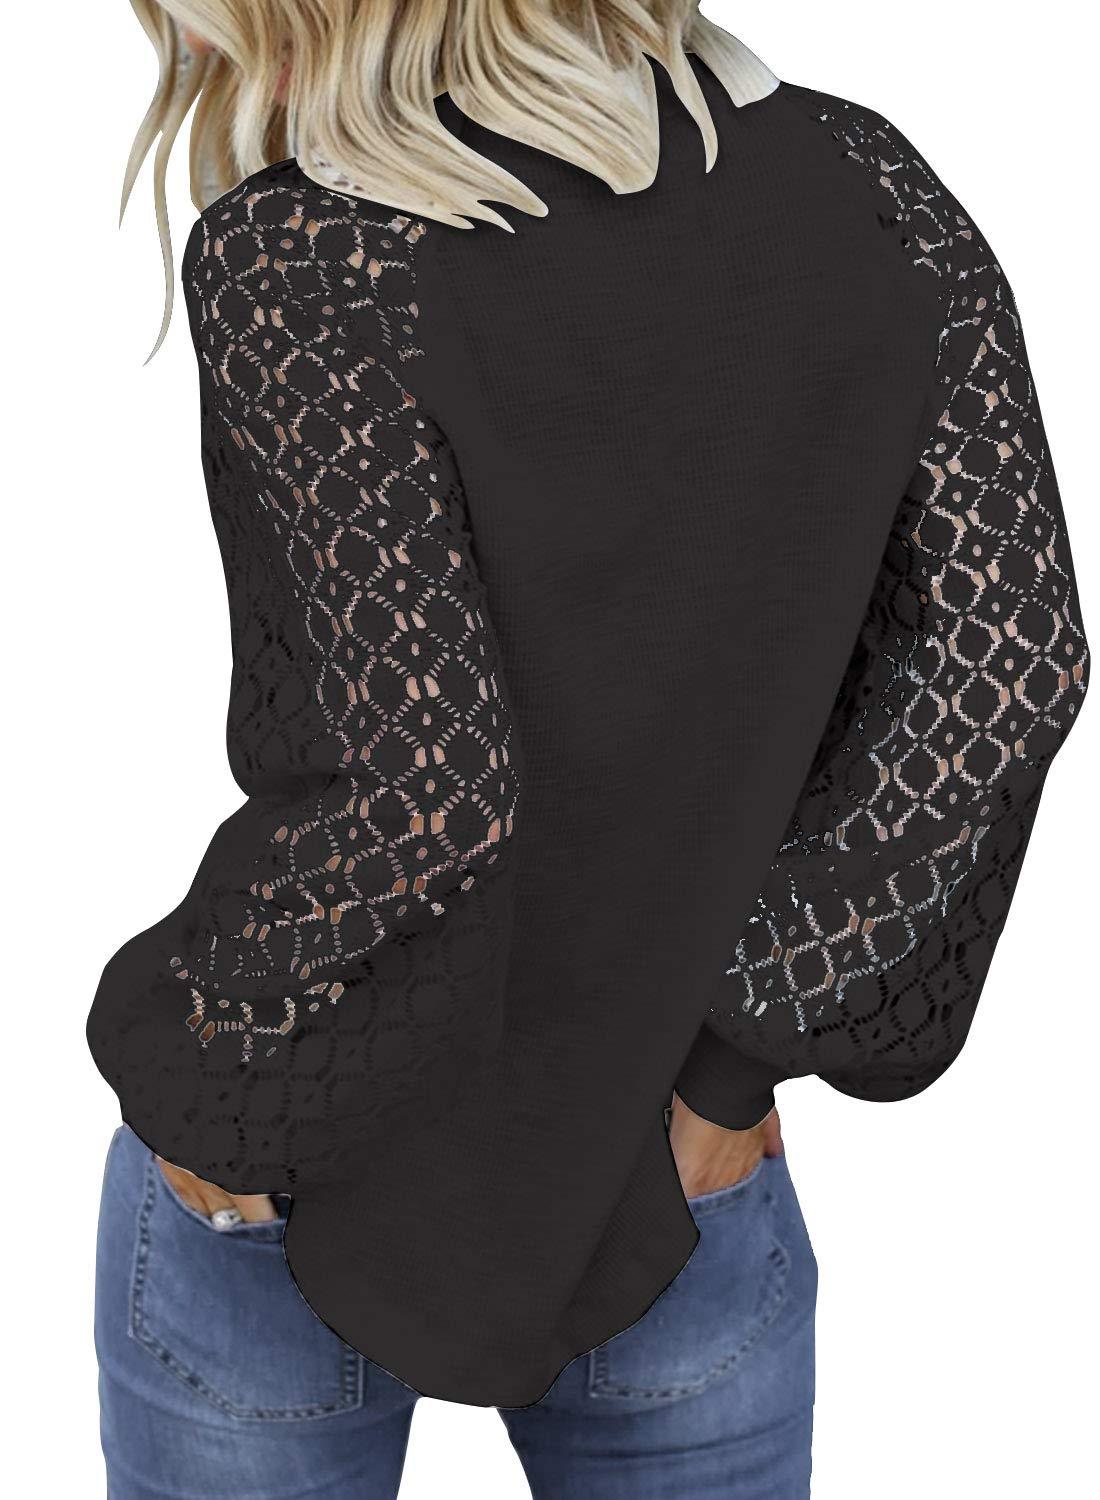 MIHOLL Women's Long Sleeve Tops Lace Casual Loose Blouses T Shirts (Black, Large) - Bona Fide Fashion